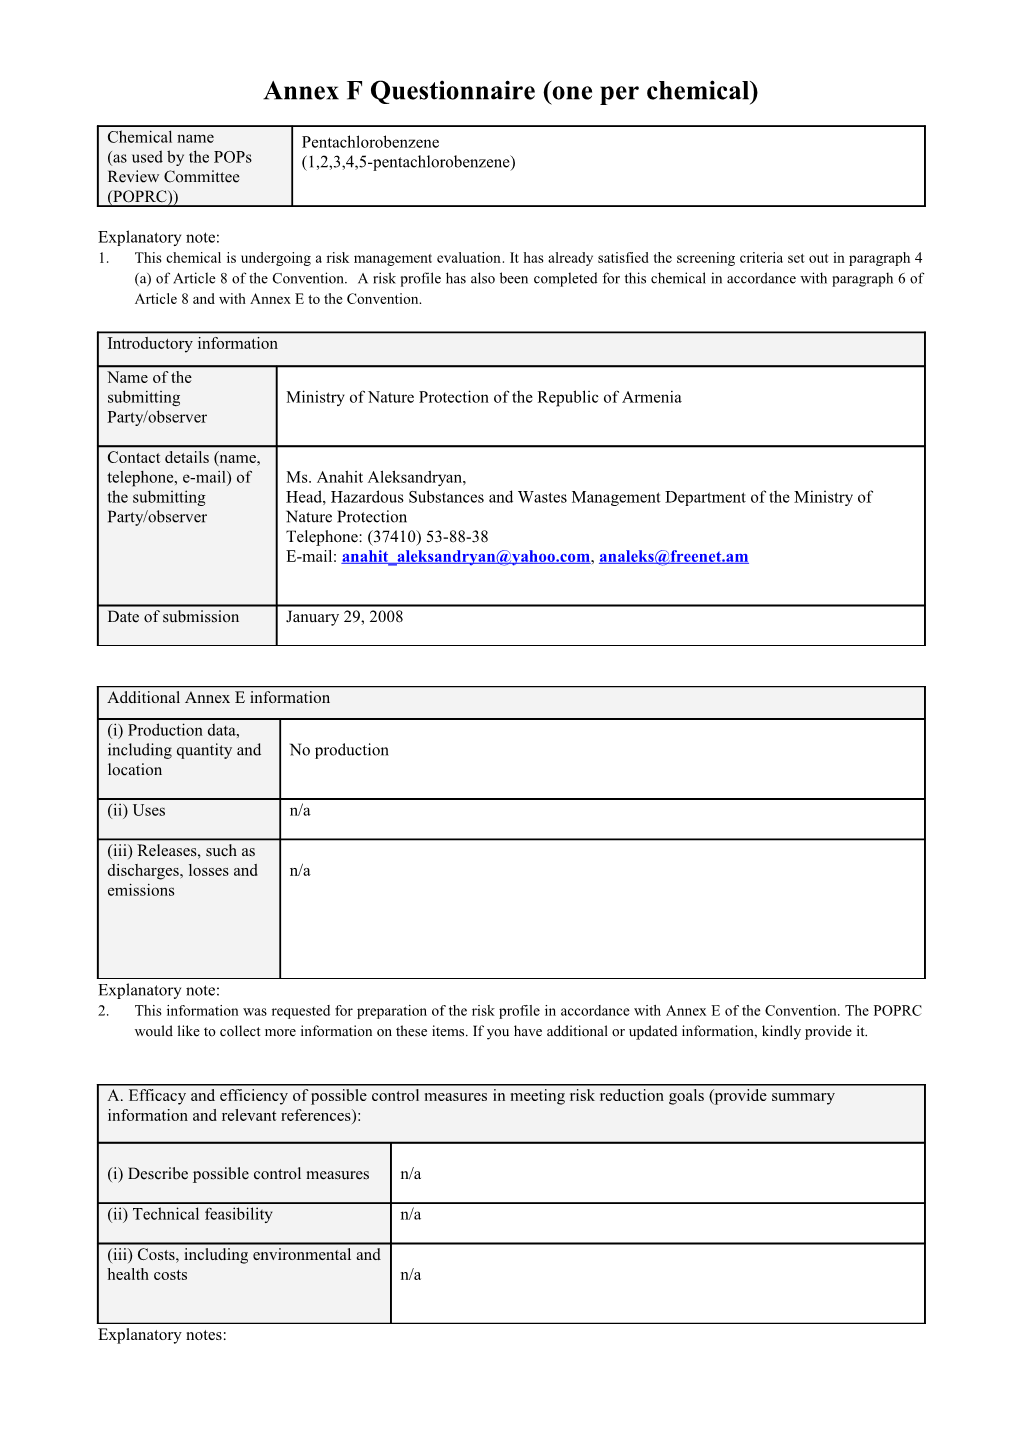 Annex F Questionnaire (One Per Chemical)